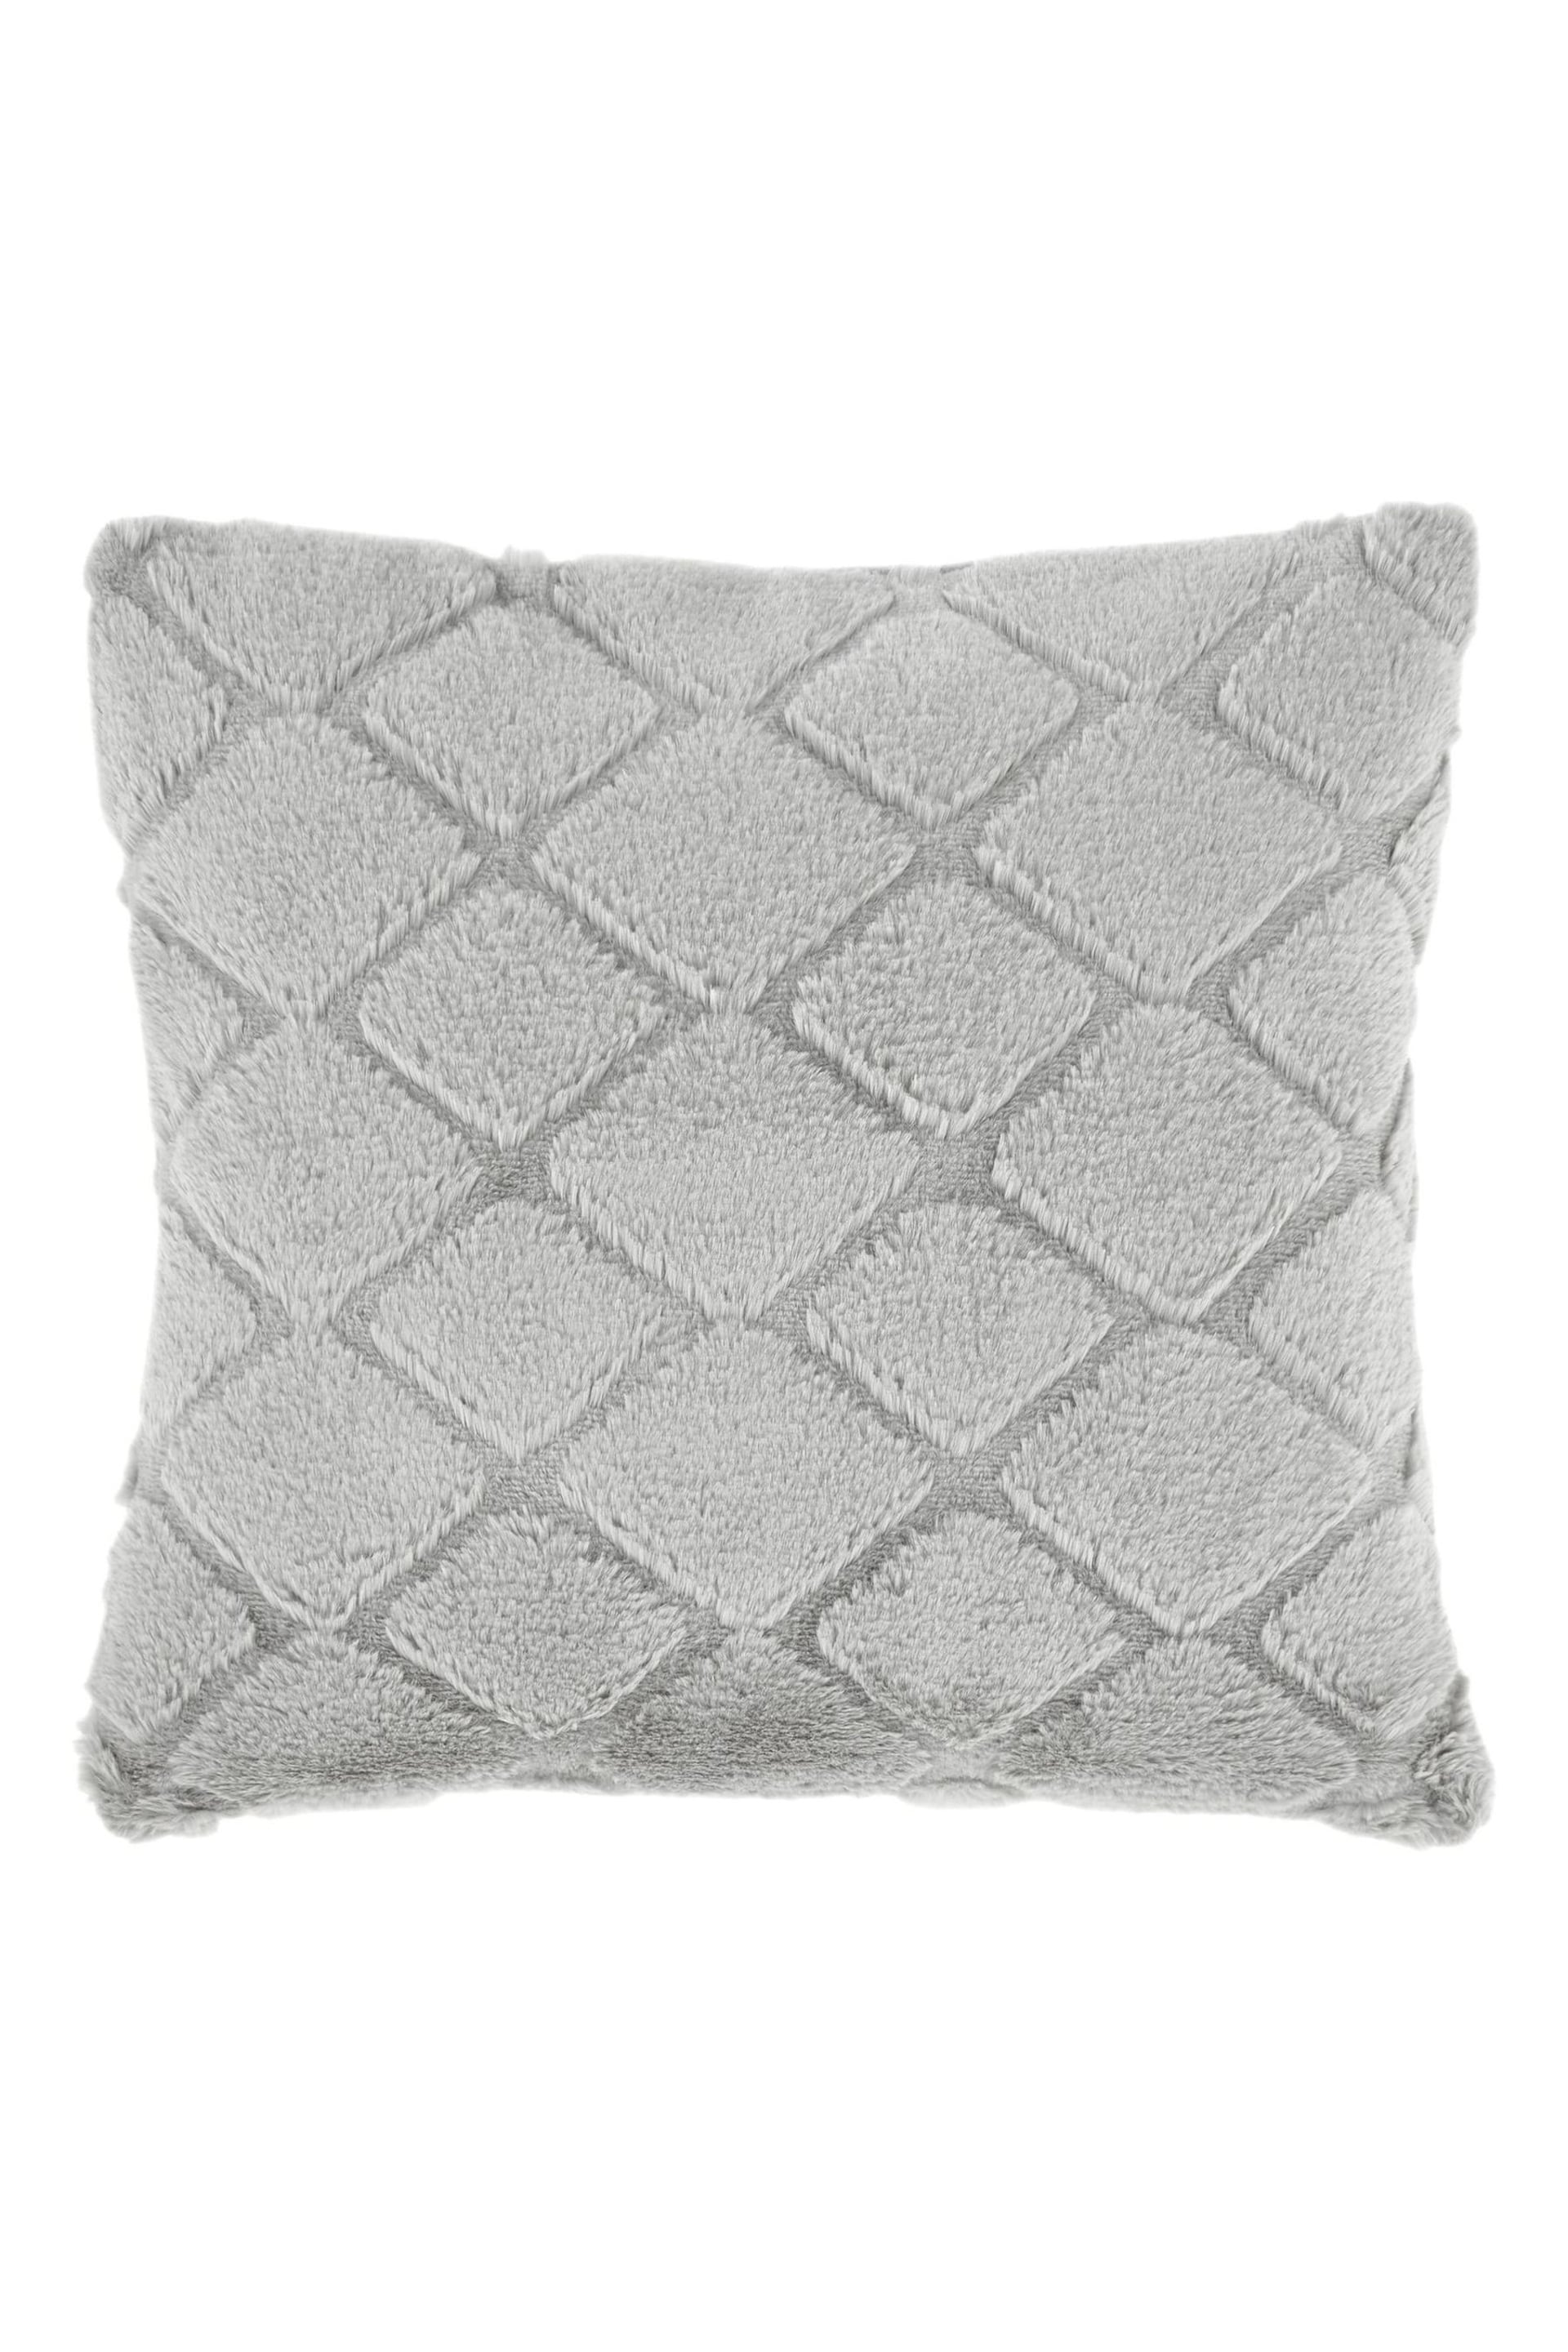 Catherine Lansfield Silver Cosy Diamond Cushion - Image 4 of 5